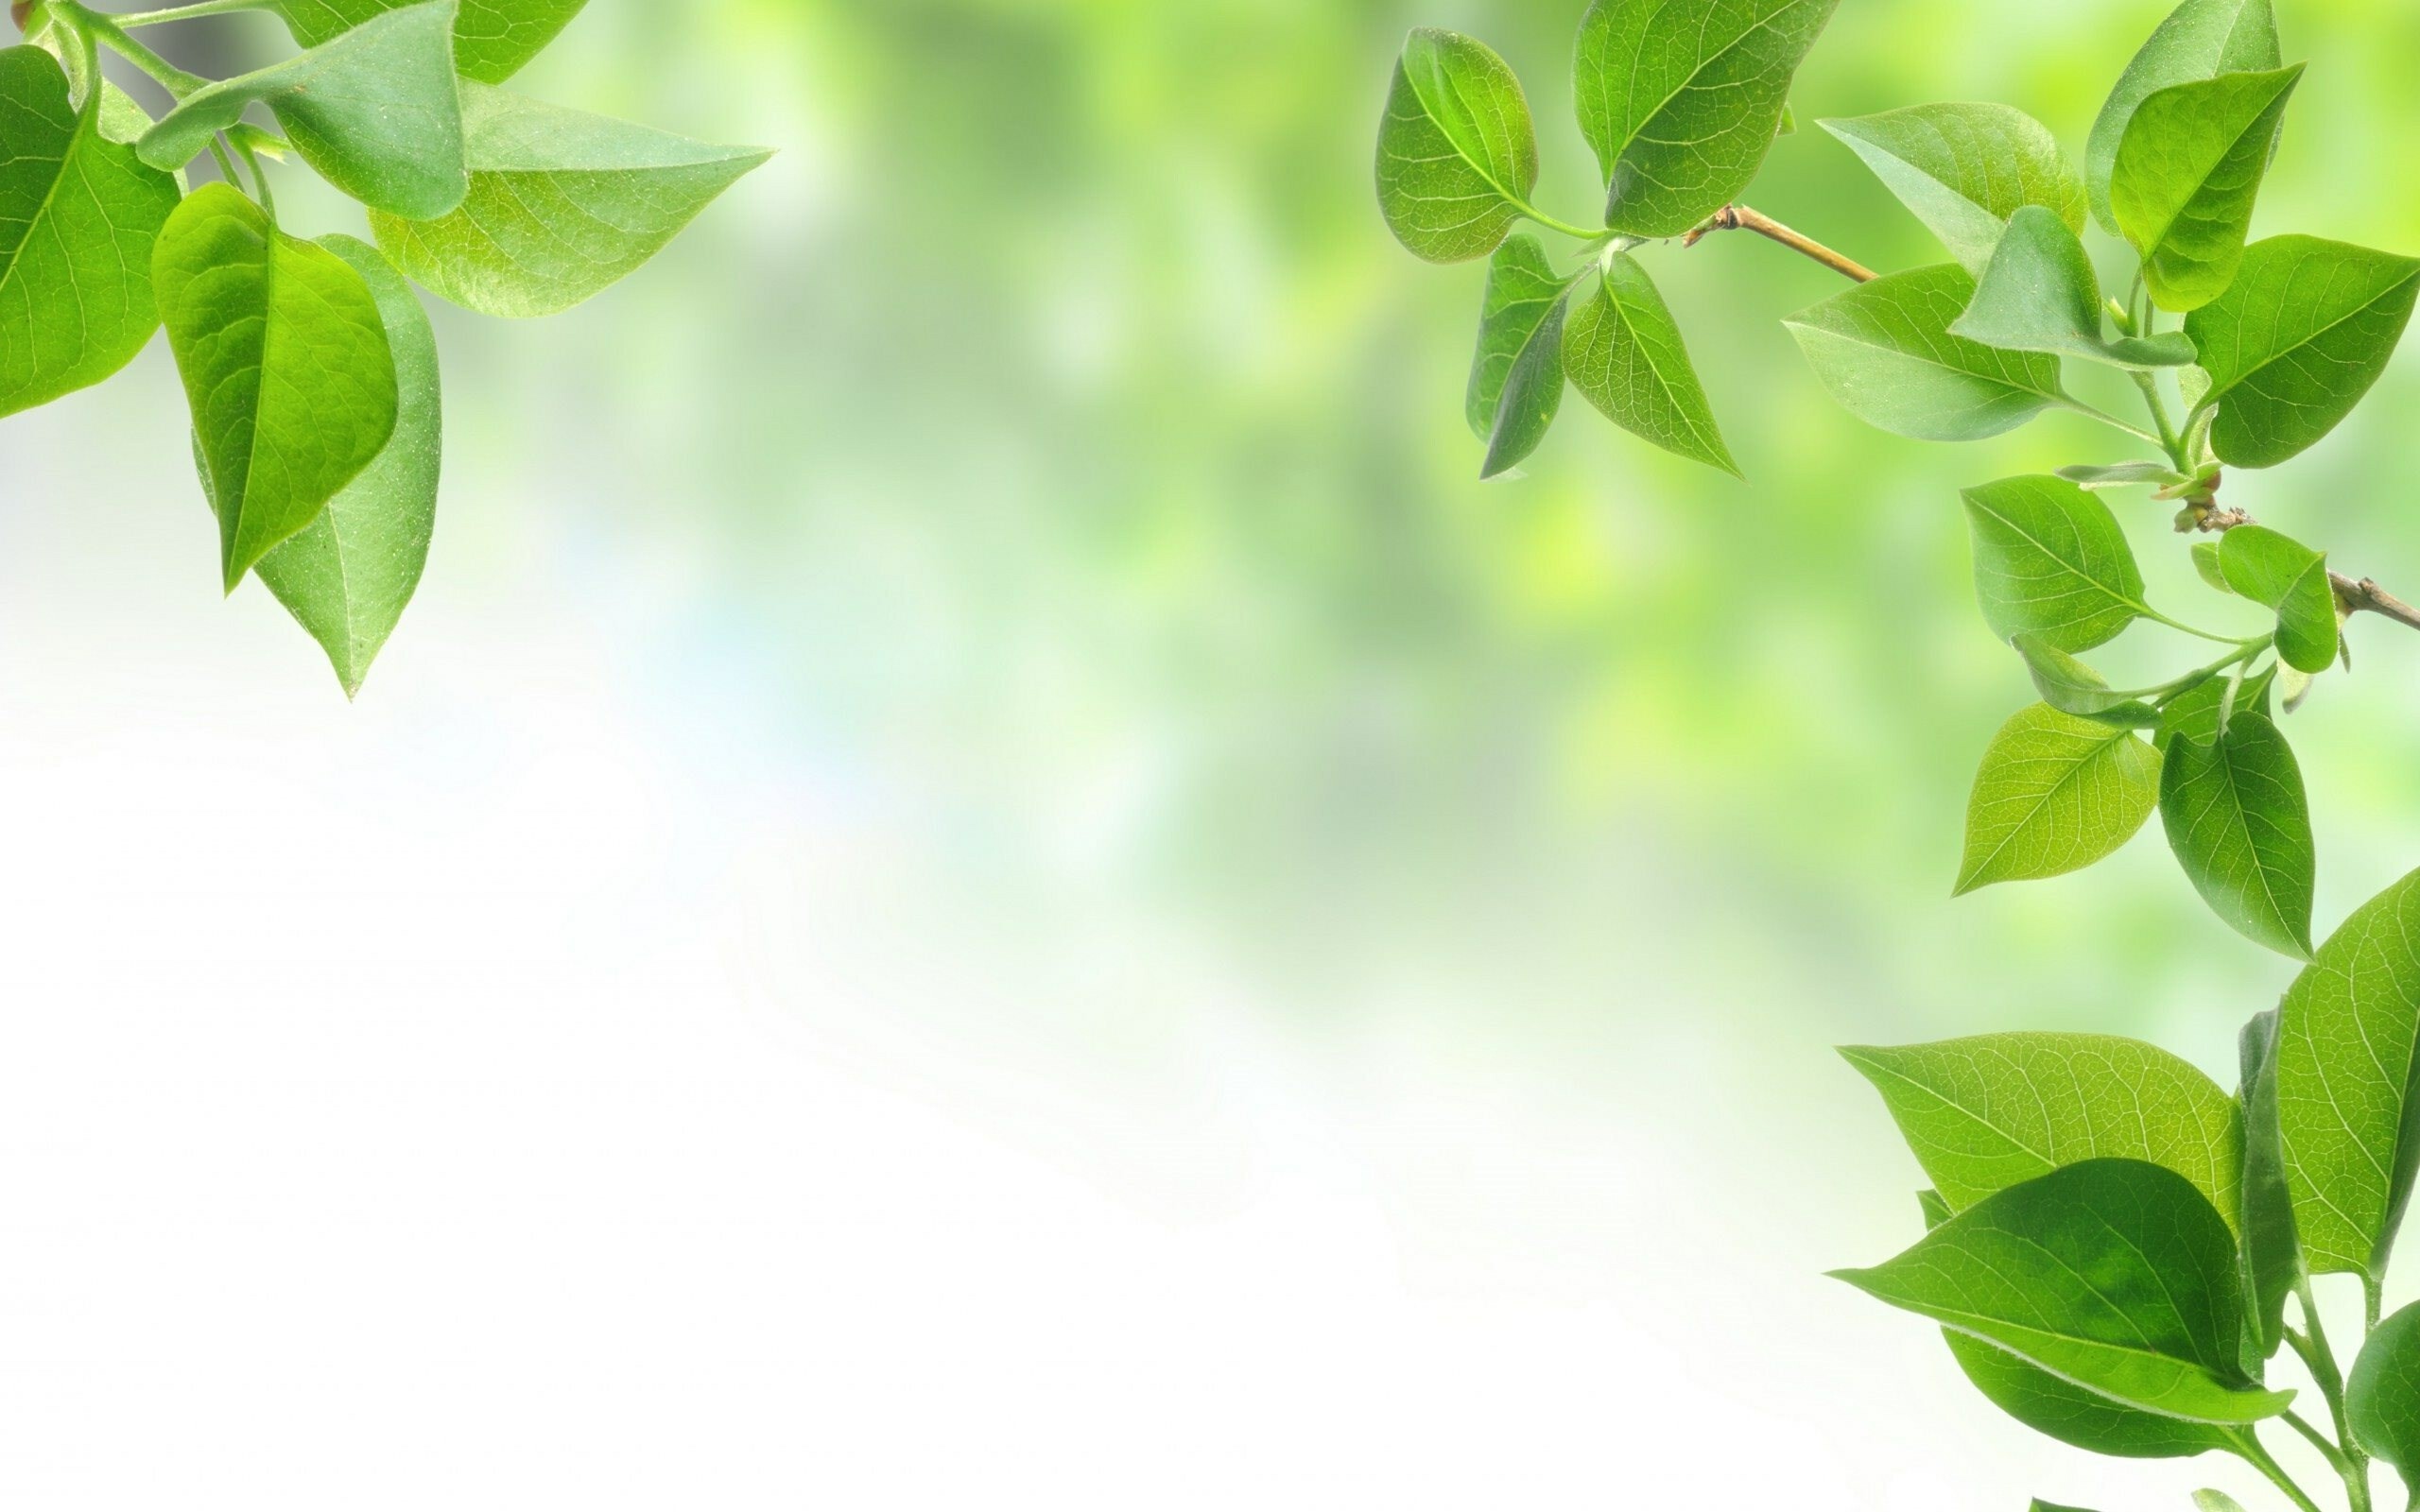 Leaf: Waxy plant cuticles reduce water loss, Vegetation. 2560x1600 HD Wallpaper.